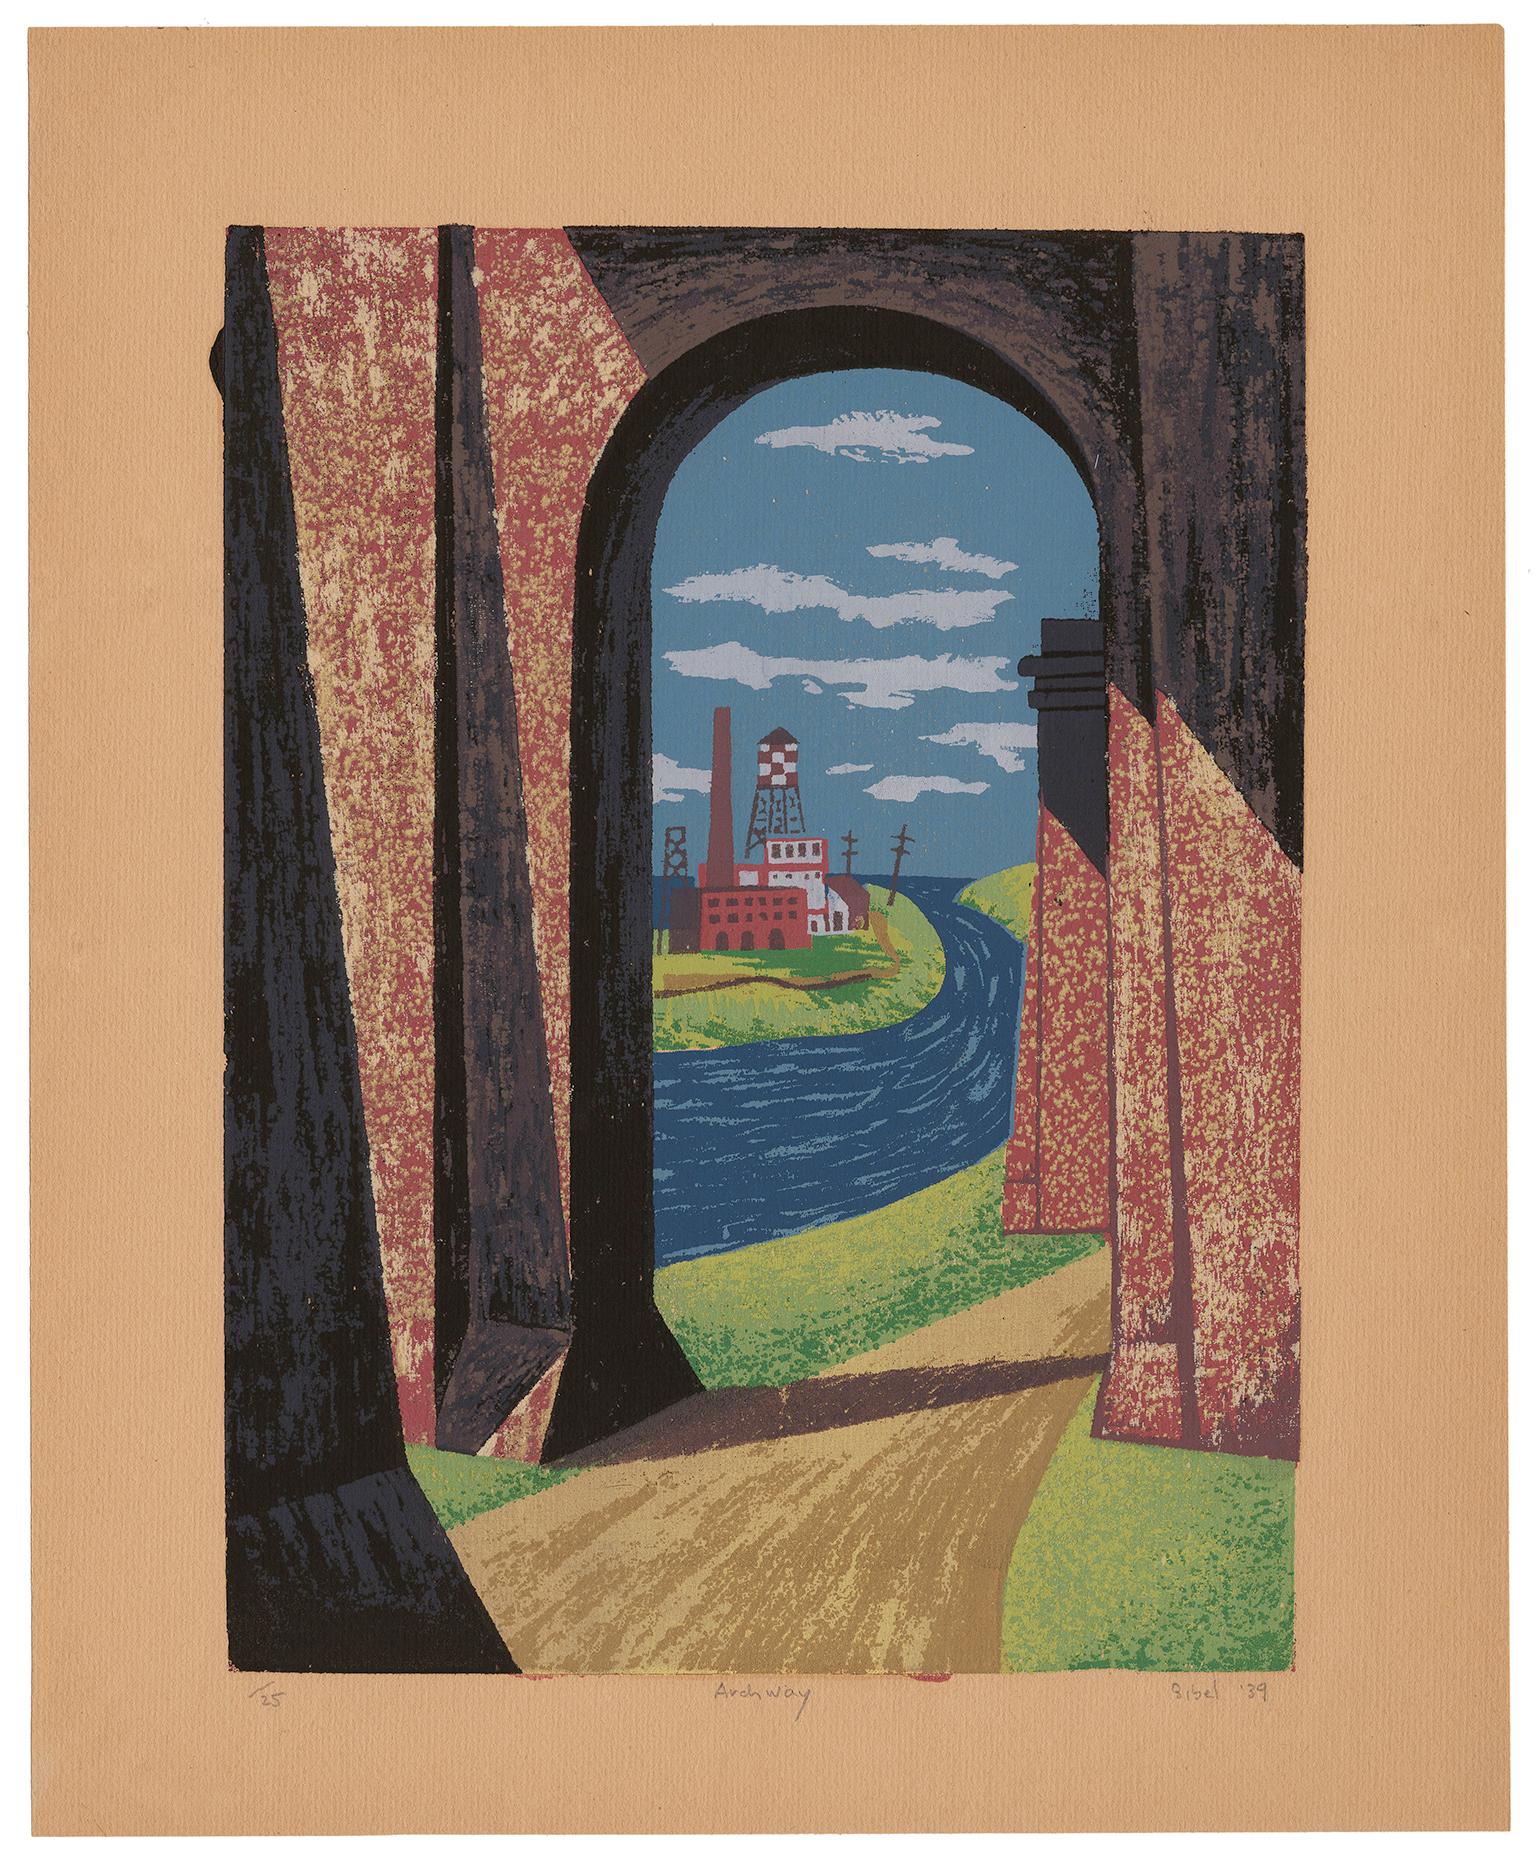 'Archway' — 1930s American Modernism, WPA - Print by Leon Bibel